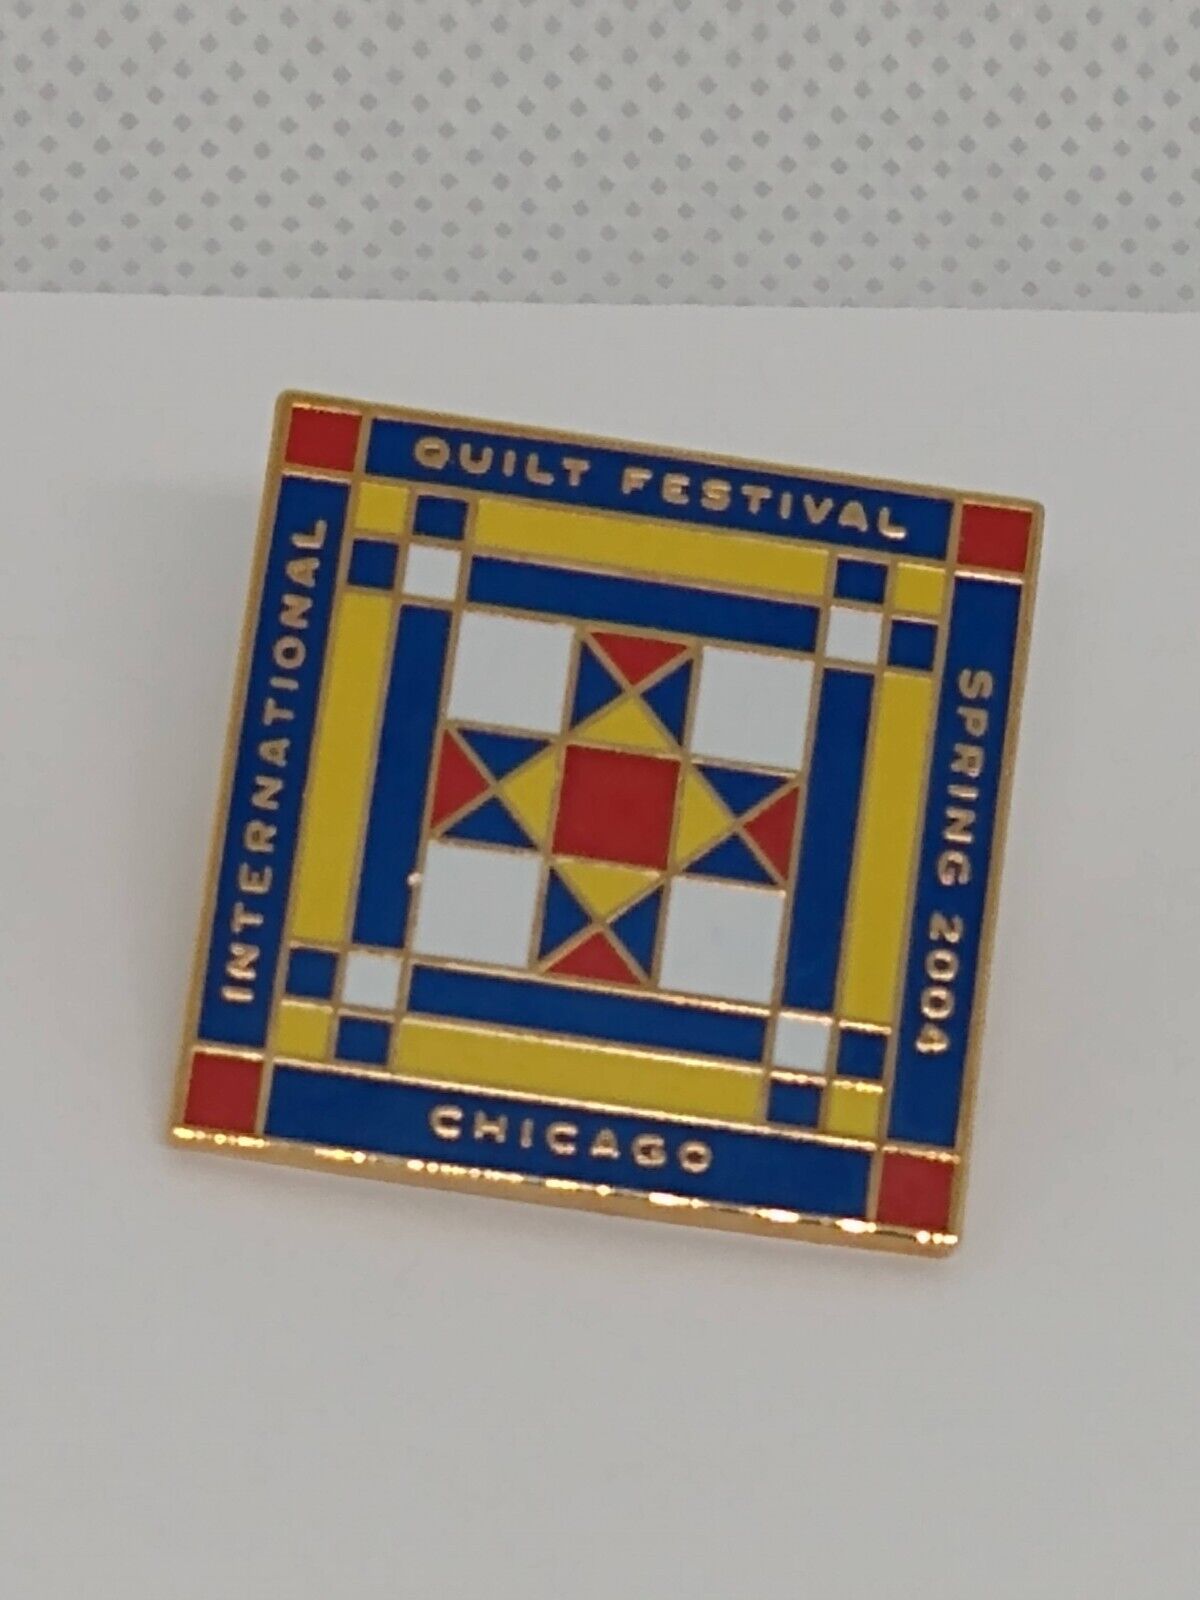 International Quilt Festival Chicago Spring 2004 Lapel Pin